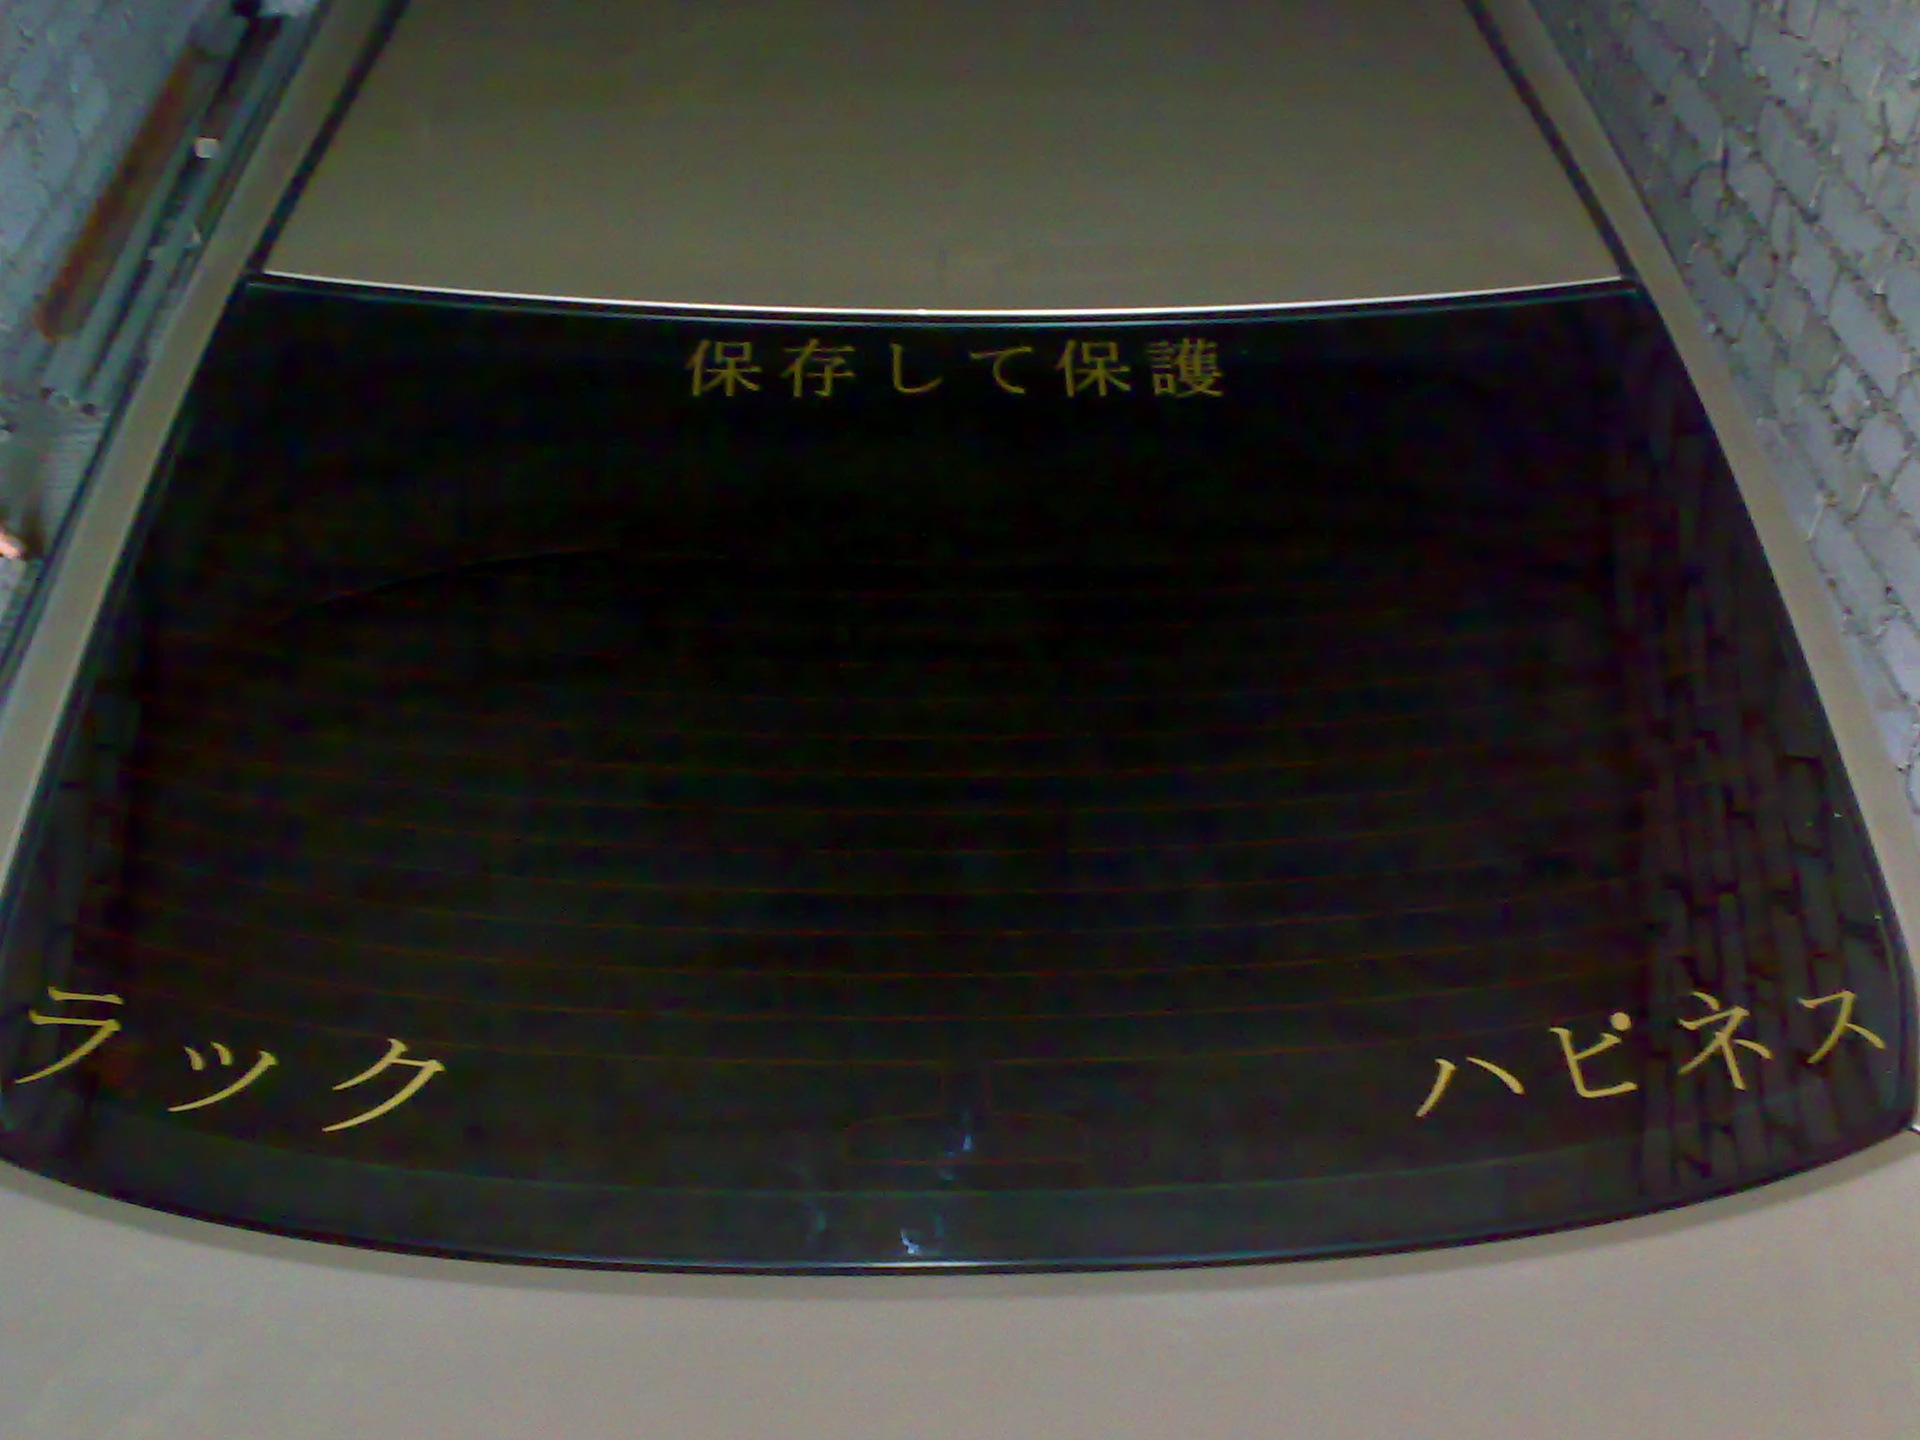  27 2010 Toyota Camry 24 2004 